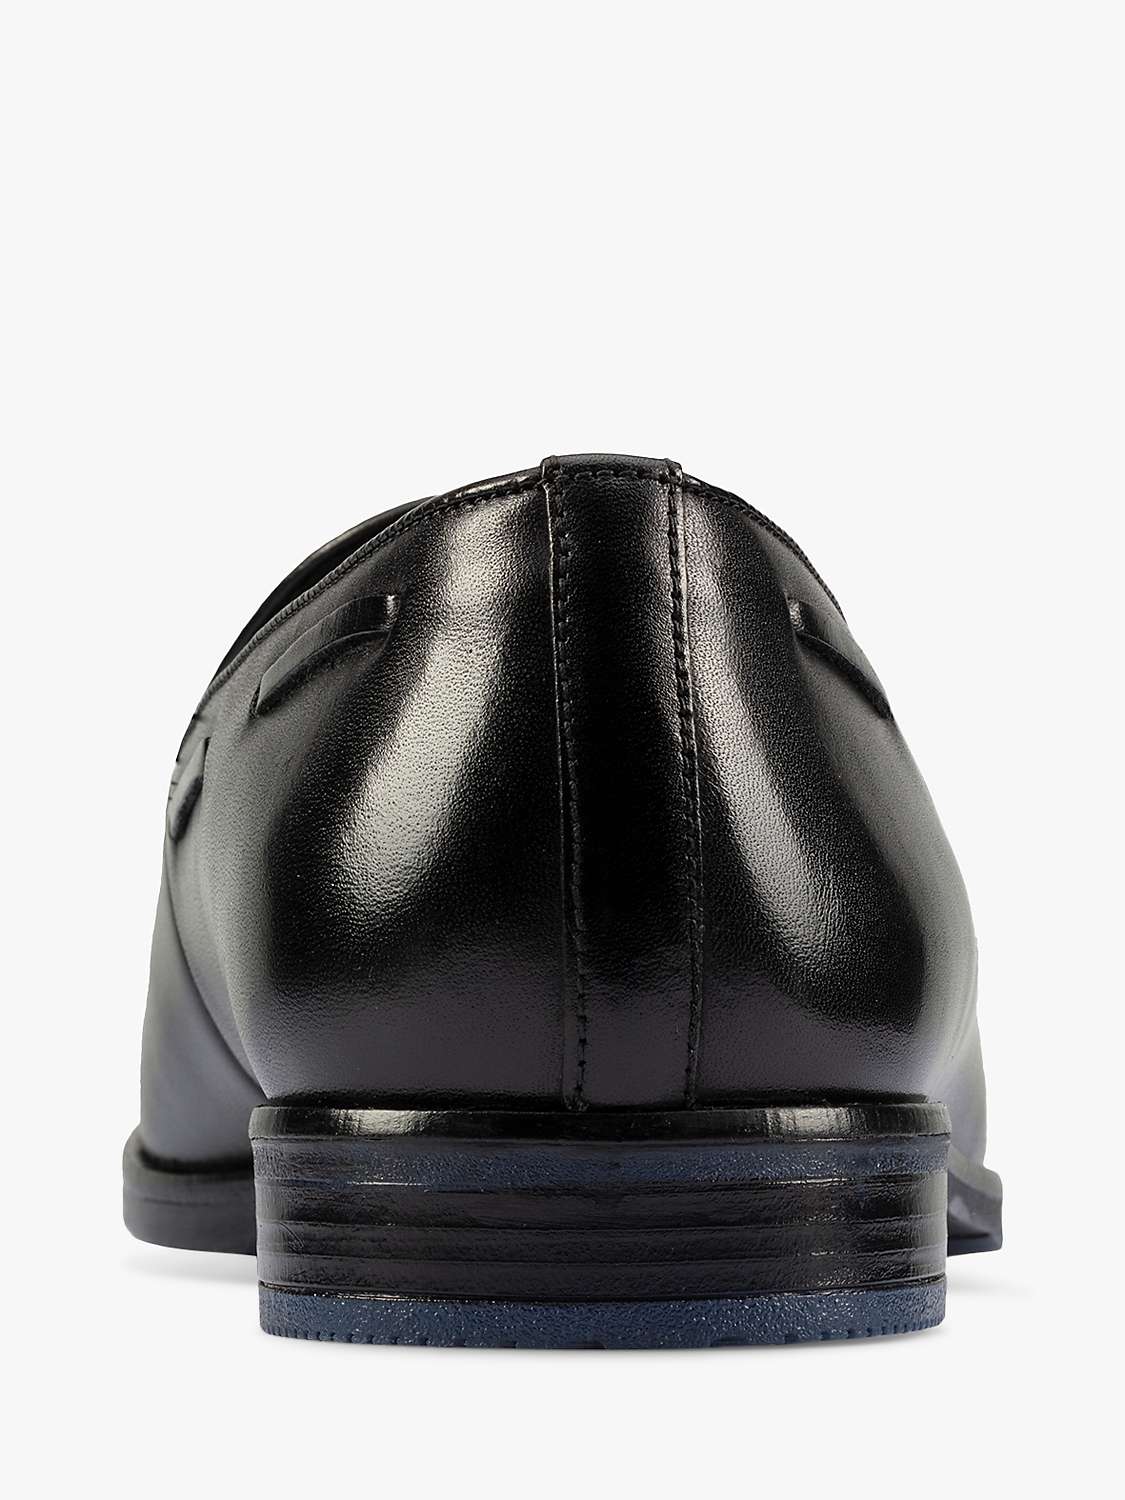 Buy Clarks CitiStride Slip Leather Tassel Loafers Online at johnlewis.com